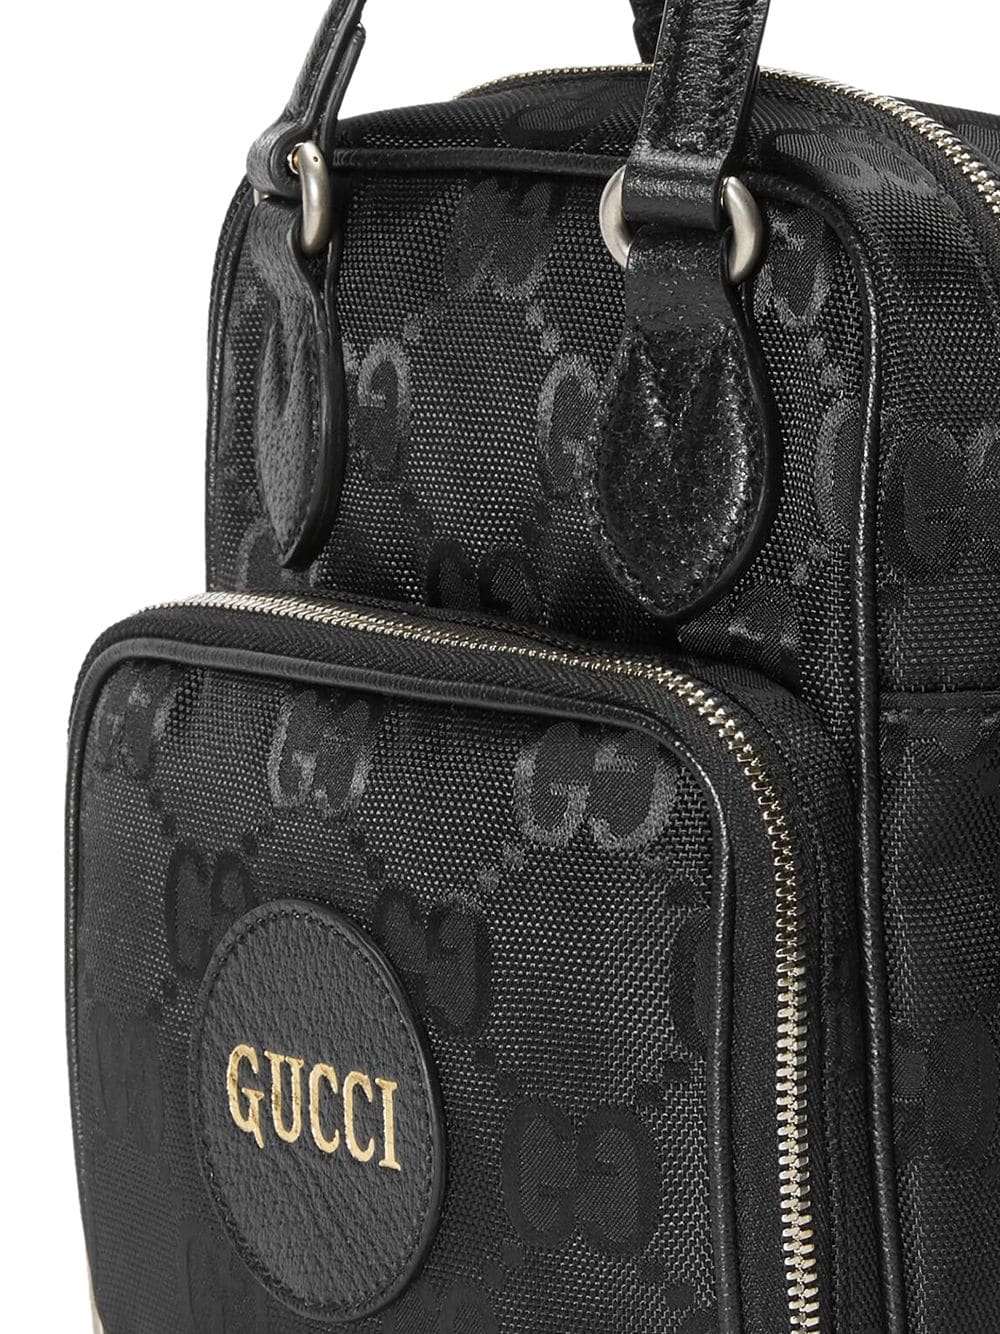 Gucci Off The Grid GG Supreme Duffle Bag - Farfetch